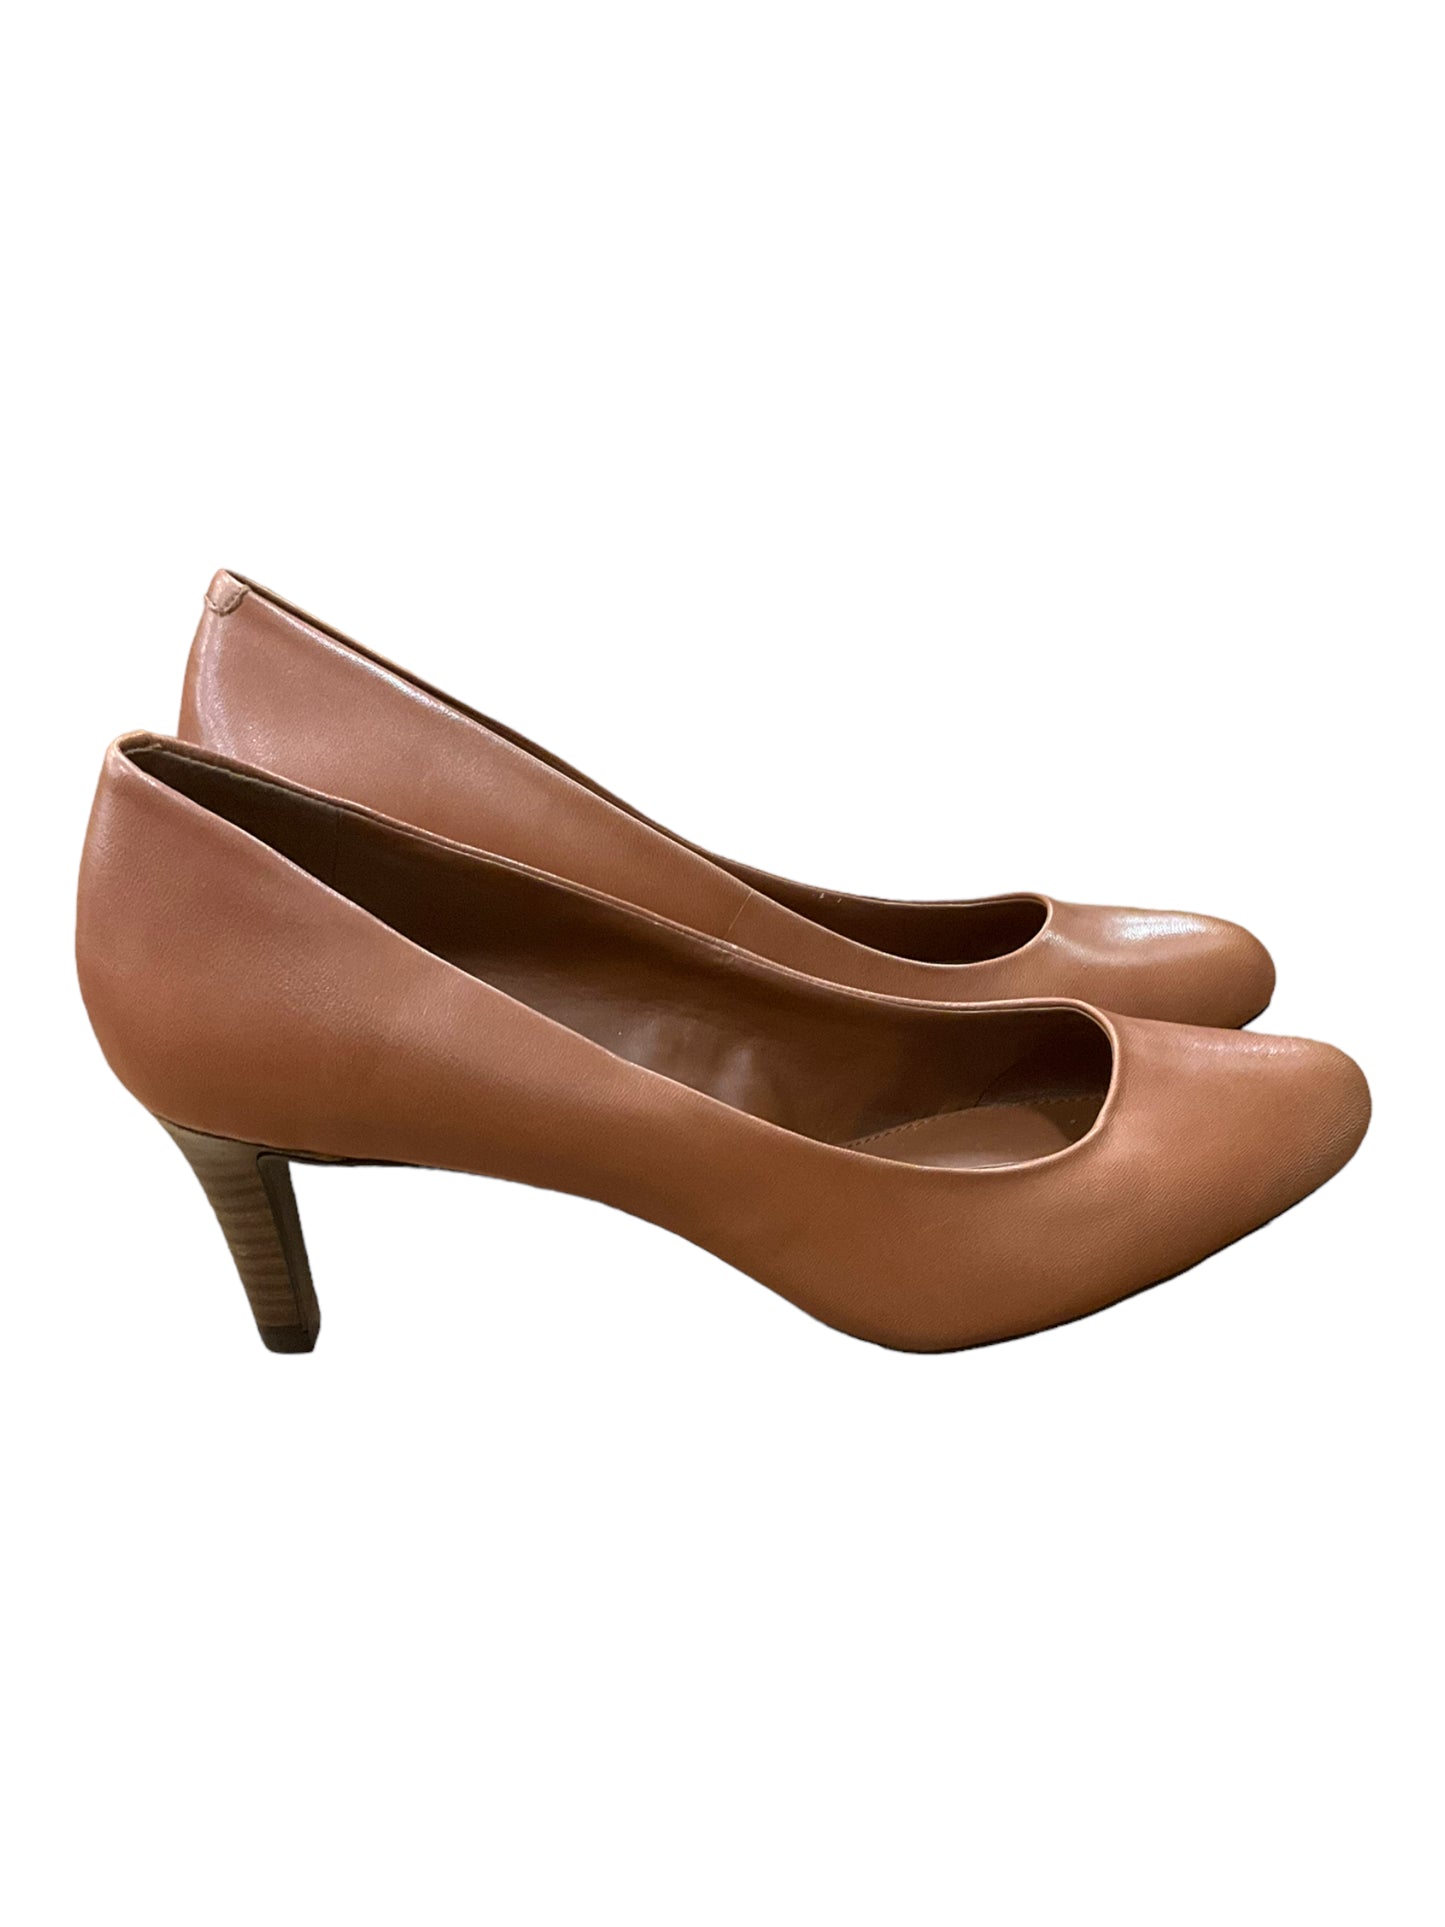 Shoes Heels Stiletto By Lauren By Ralph Lauren  Size: 11